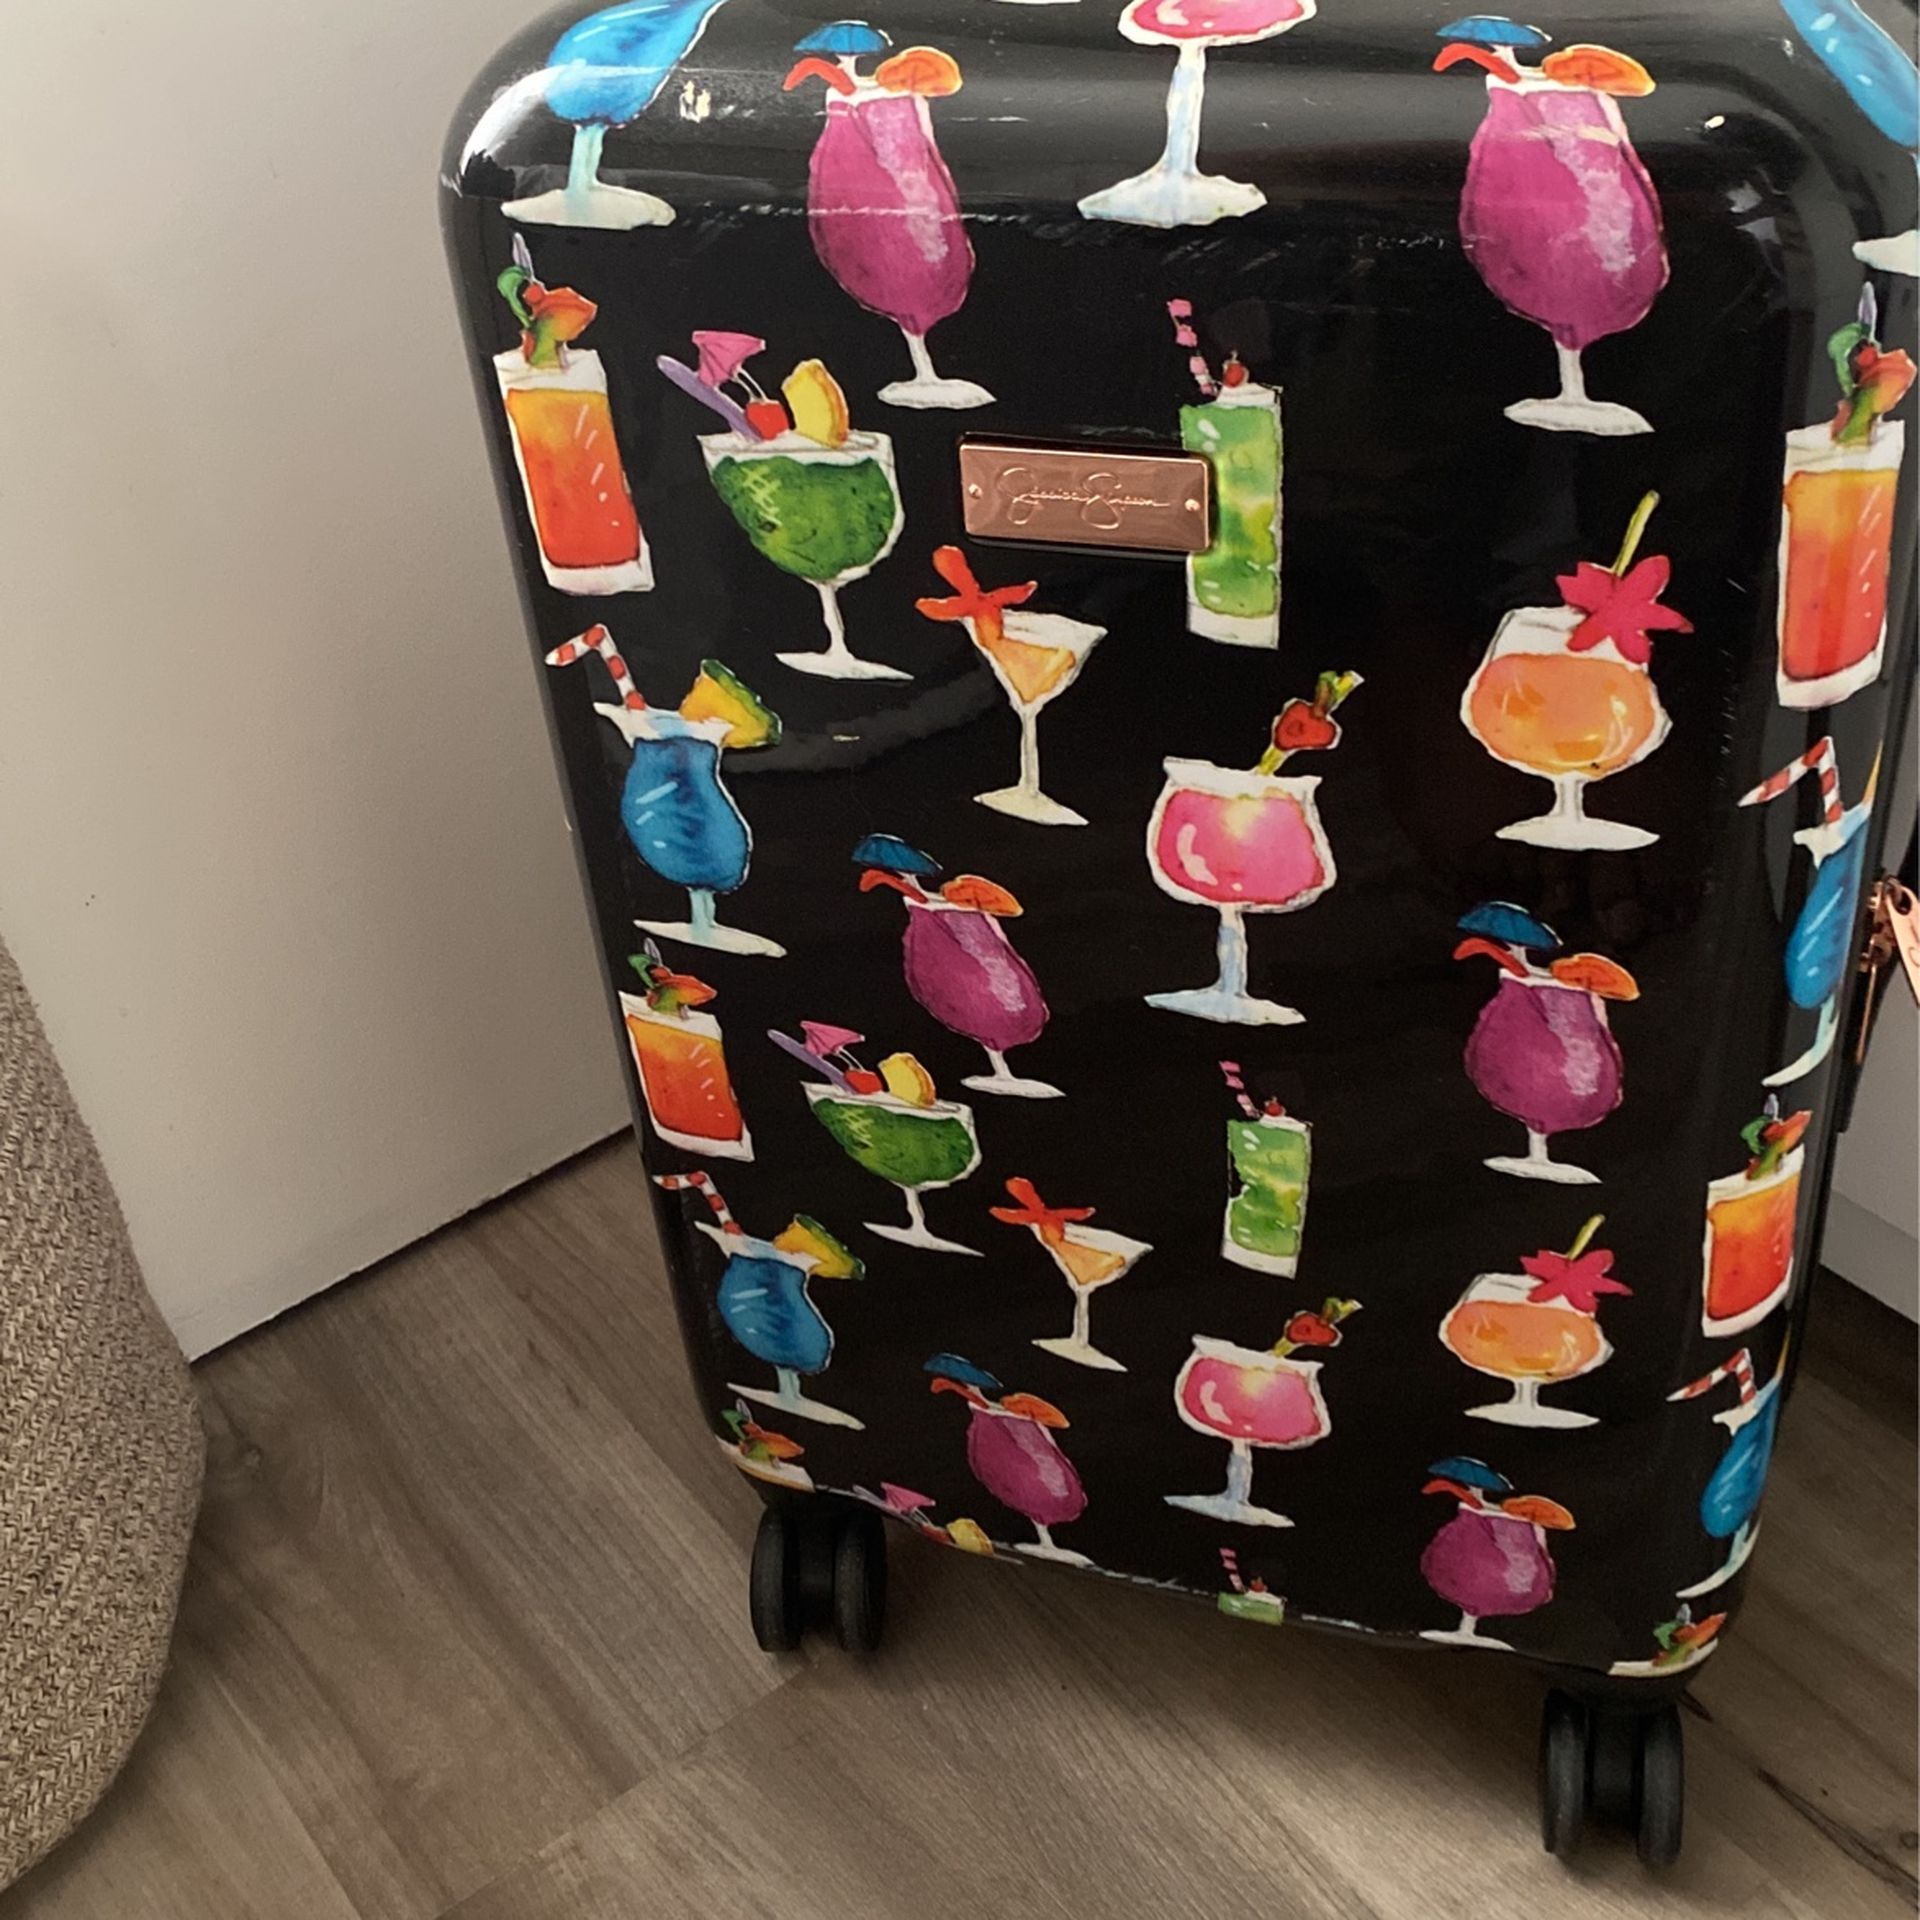 Jessica Simpson Travel Luggage 